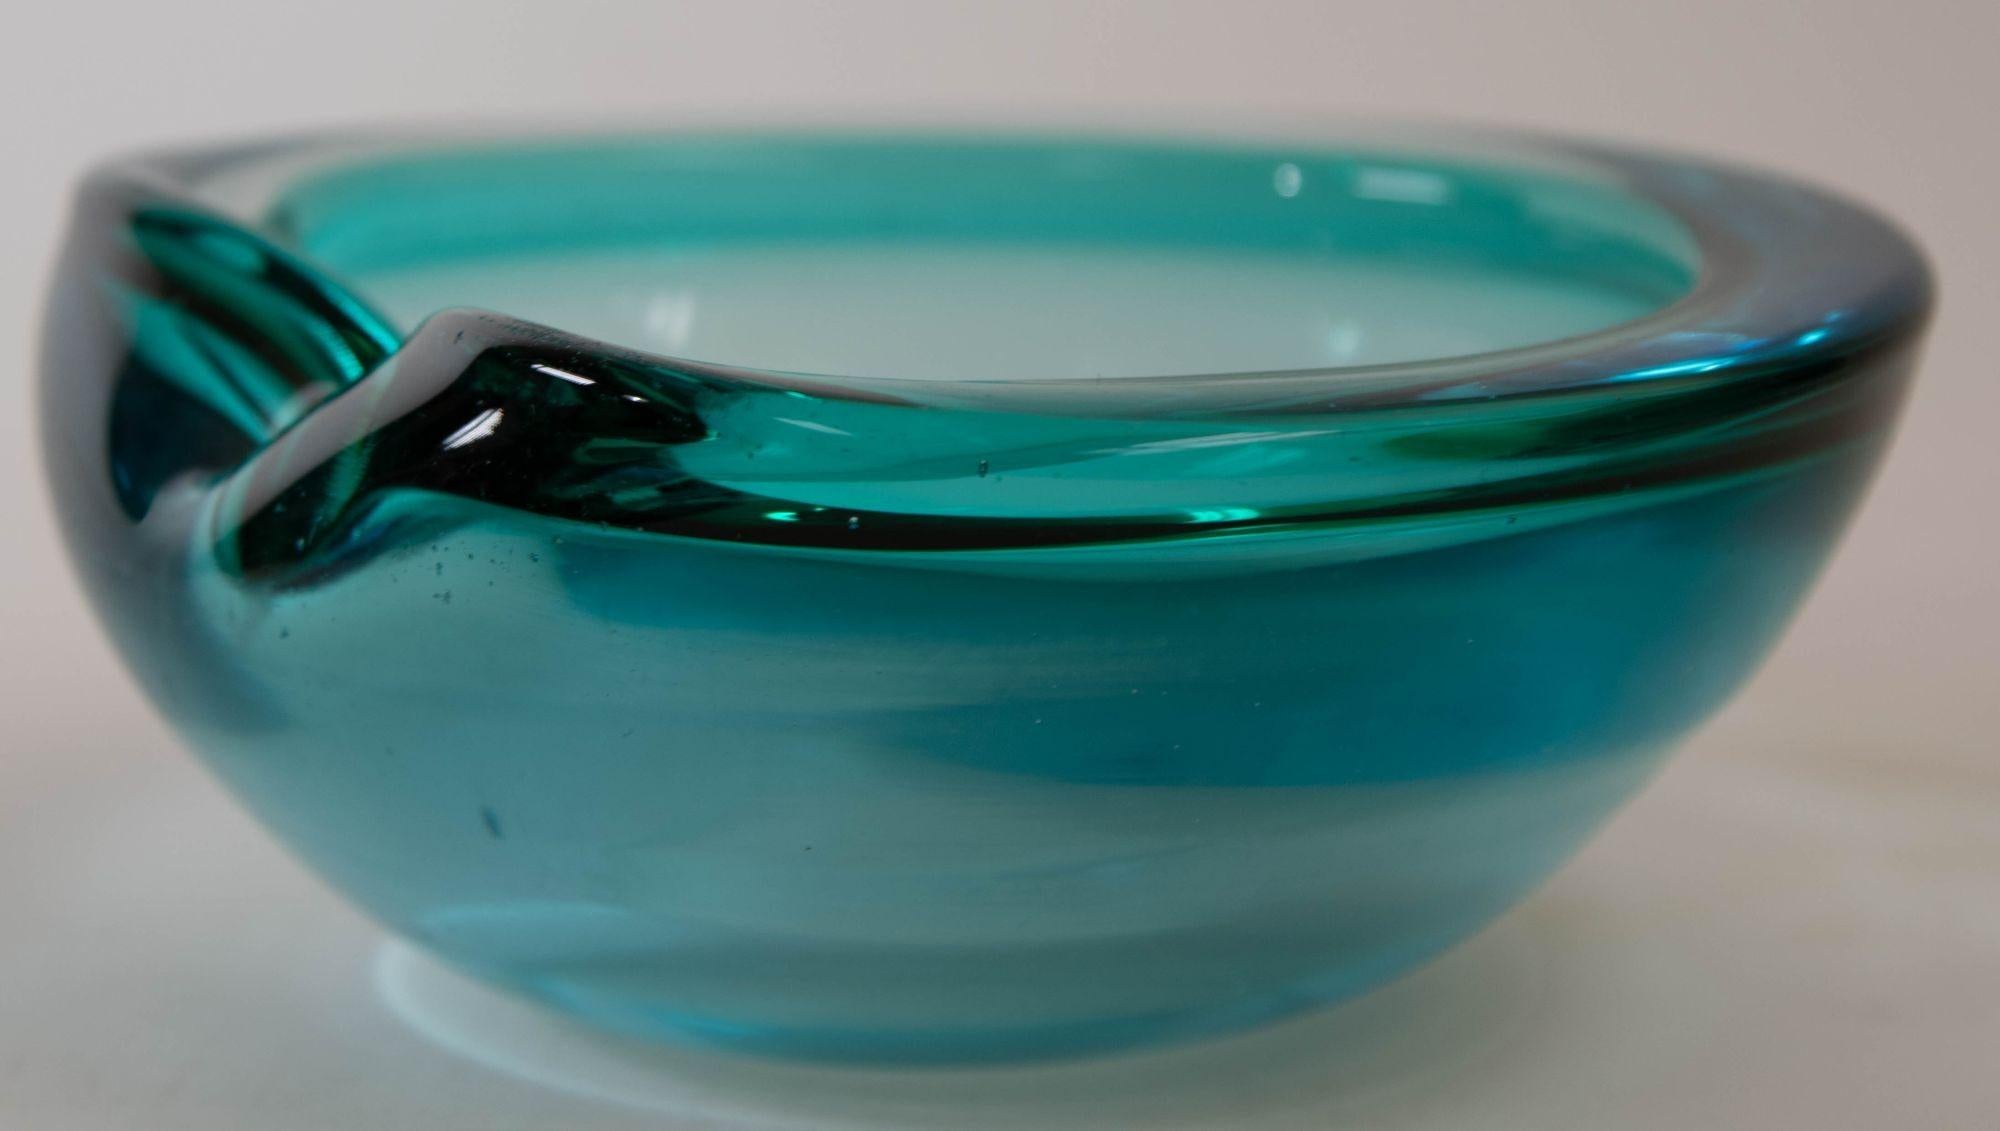 Vintage Mid-Century Modern blue glass Murano decorative bowl ashtray blue, circa 1970s.
Mid-Century Modern decorative glass bowl, ash tray.
This vintage Murano glass bowl, ashtray, ash tray was handcrafted in the 1970s in Murano, Italy- the island